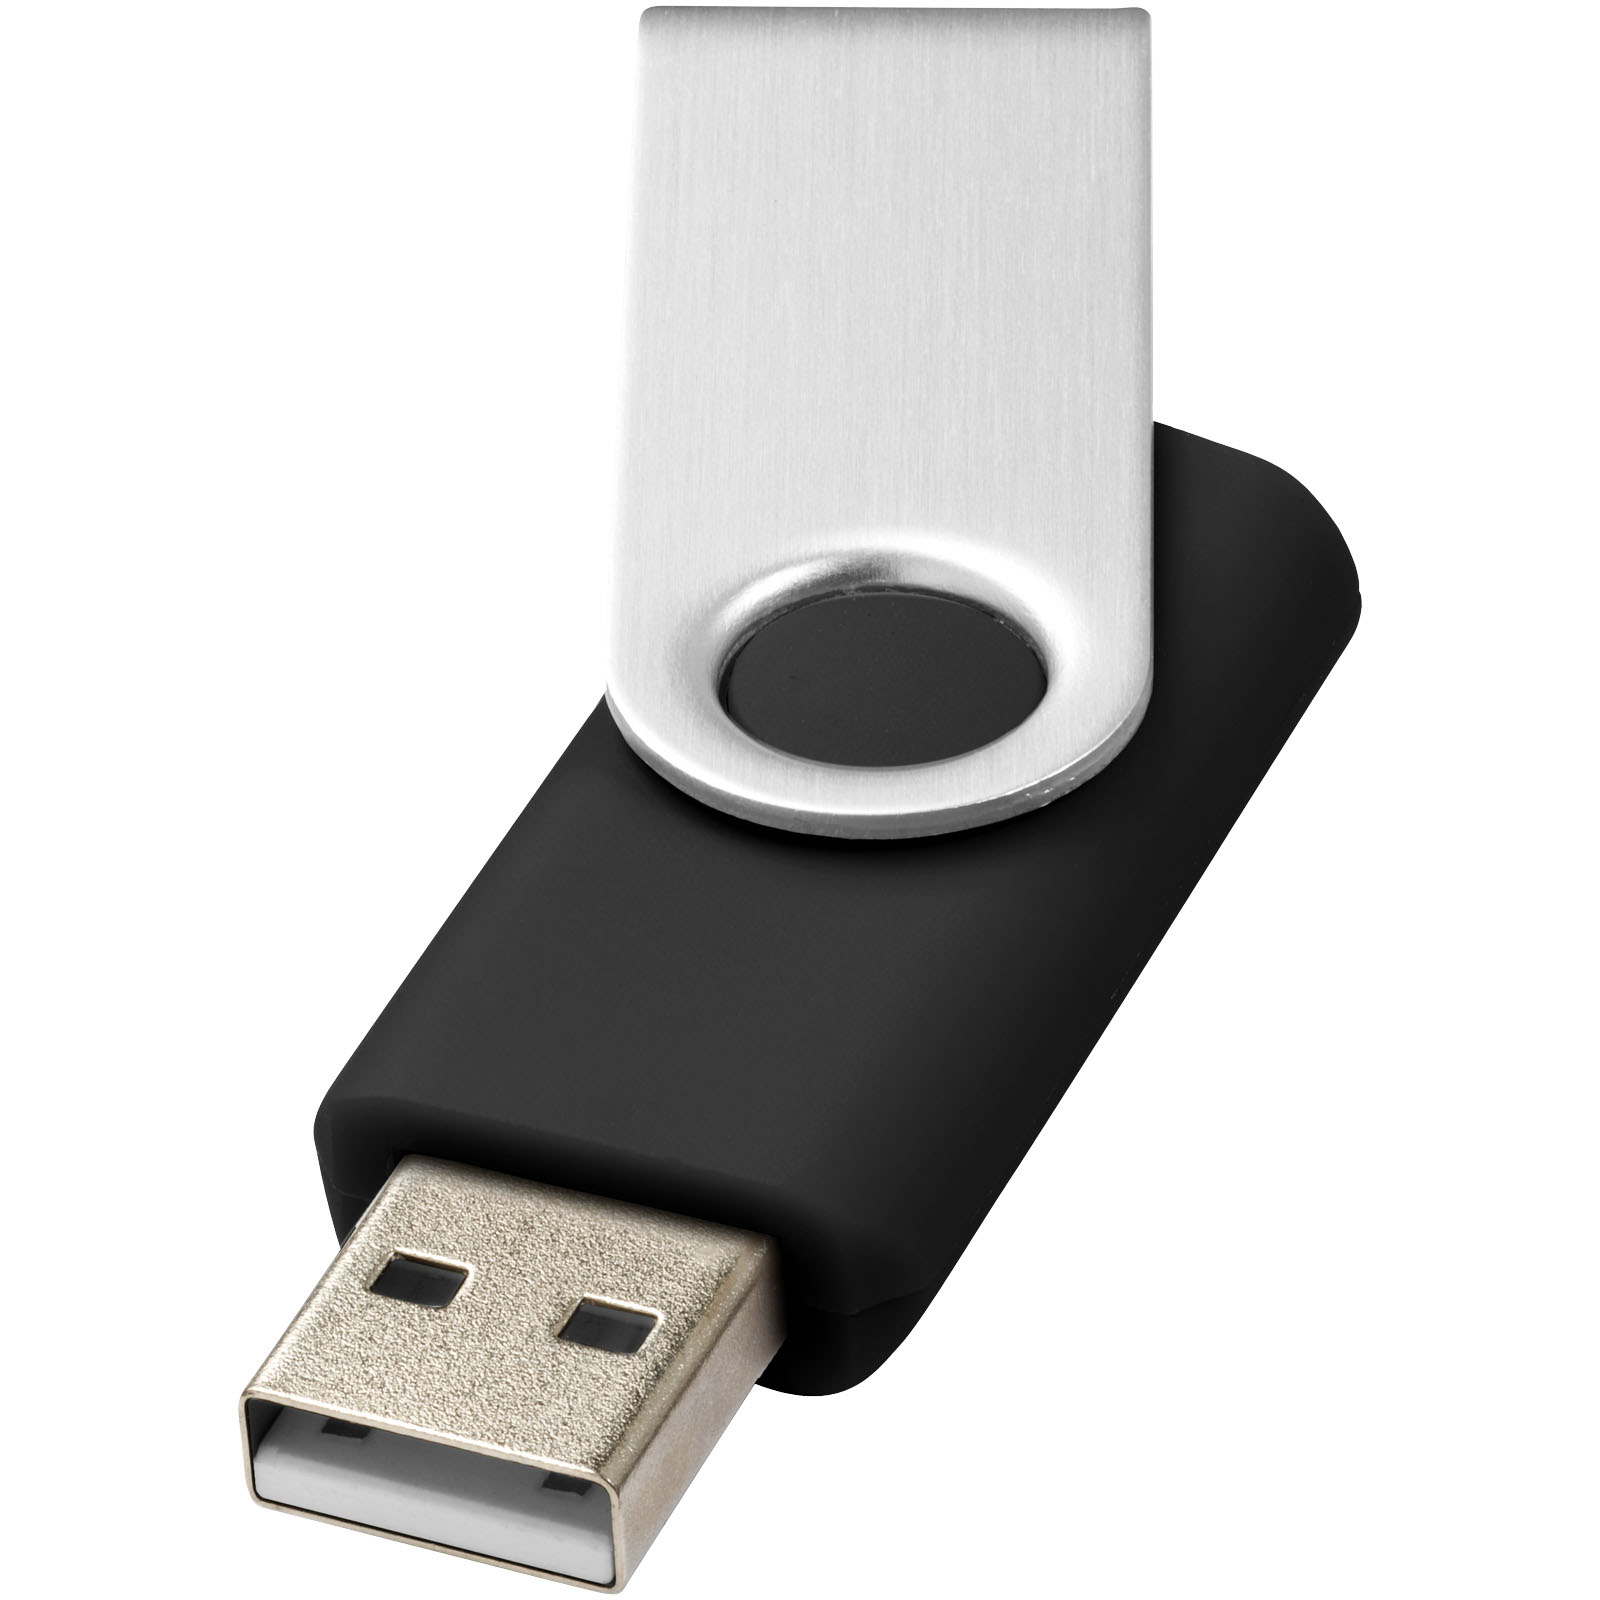 Chiavetta USB Rotate-basic da 32GB - Besozzo